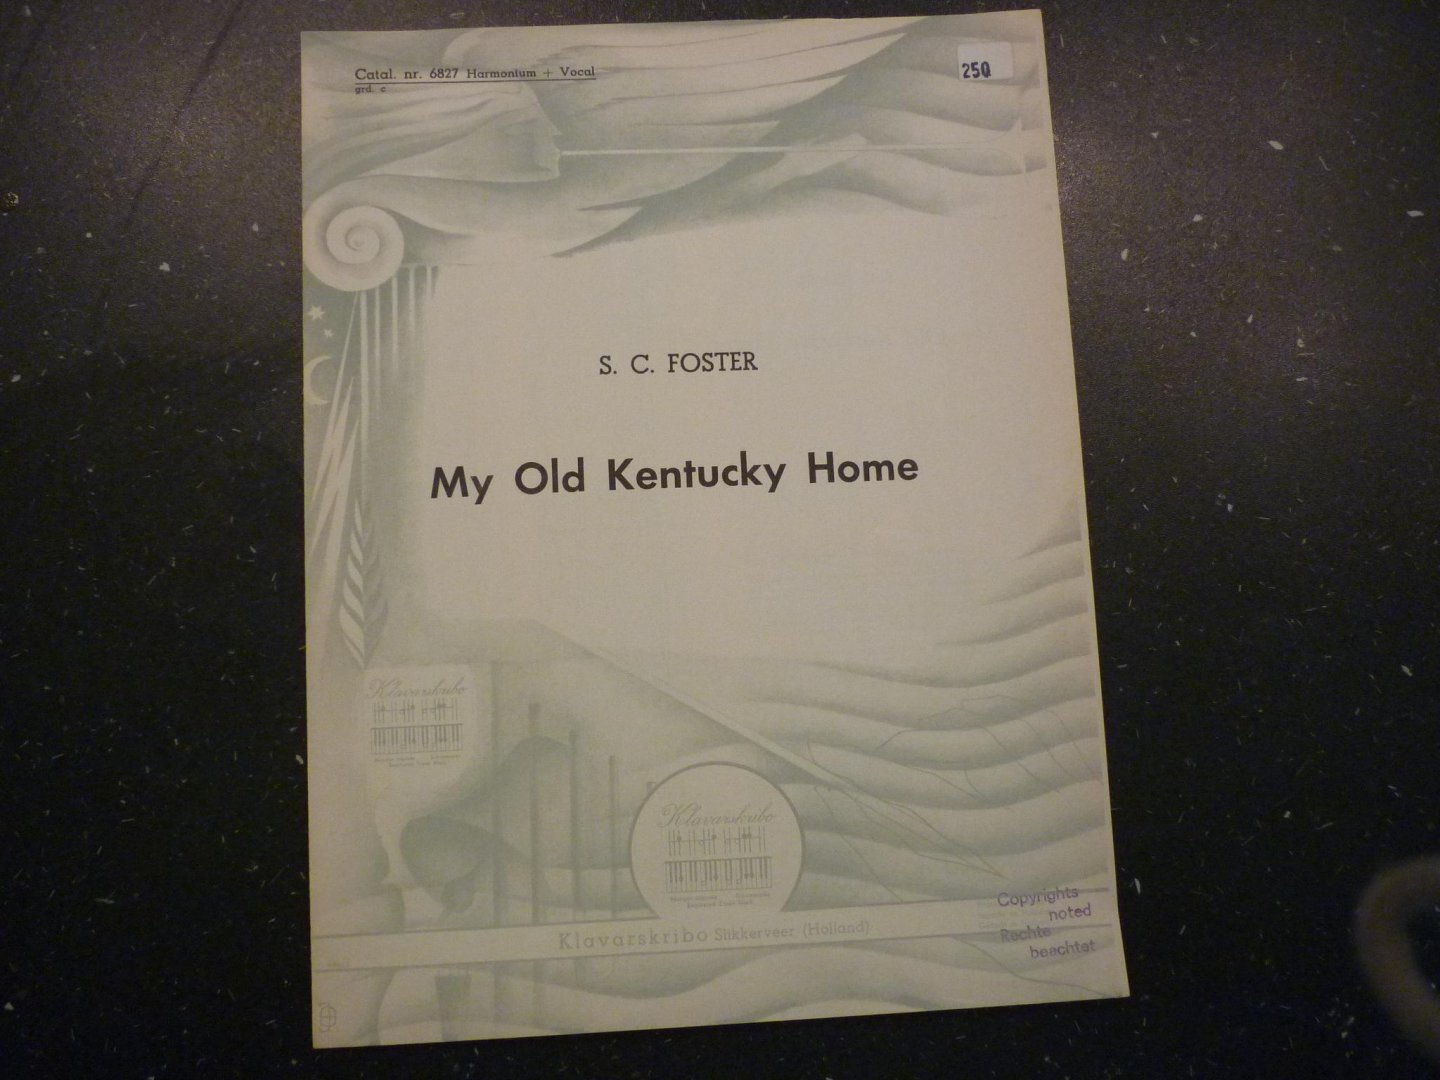 Foster; S.C. - My old Kentucky Home  /  Klavarskribo